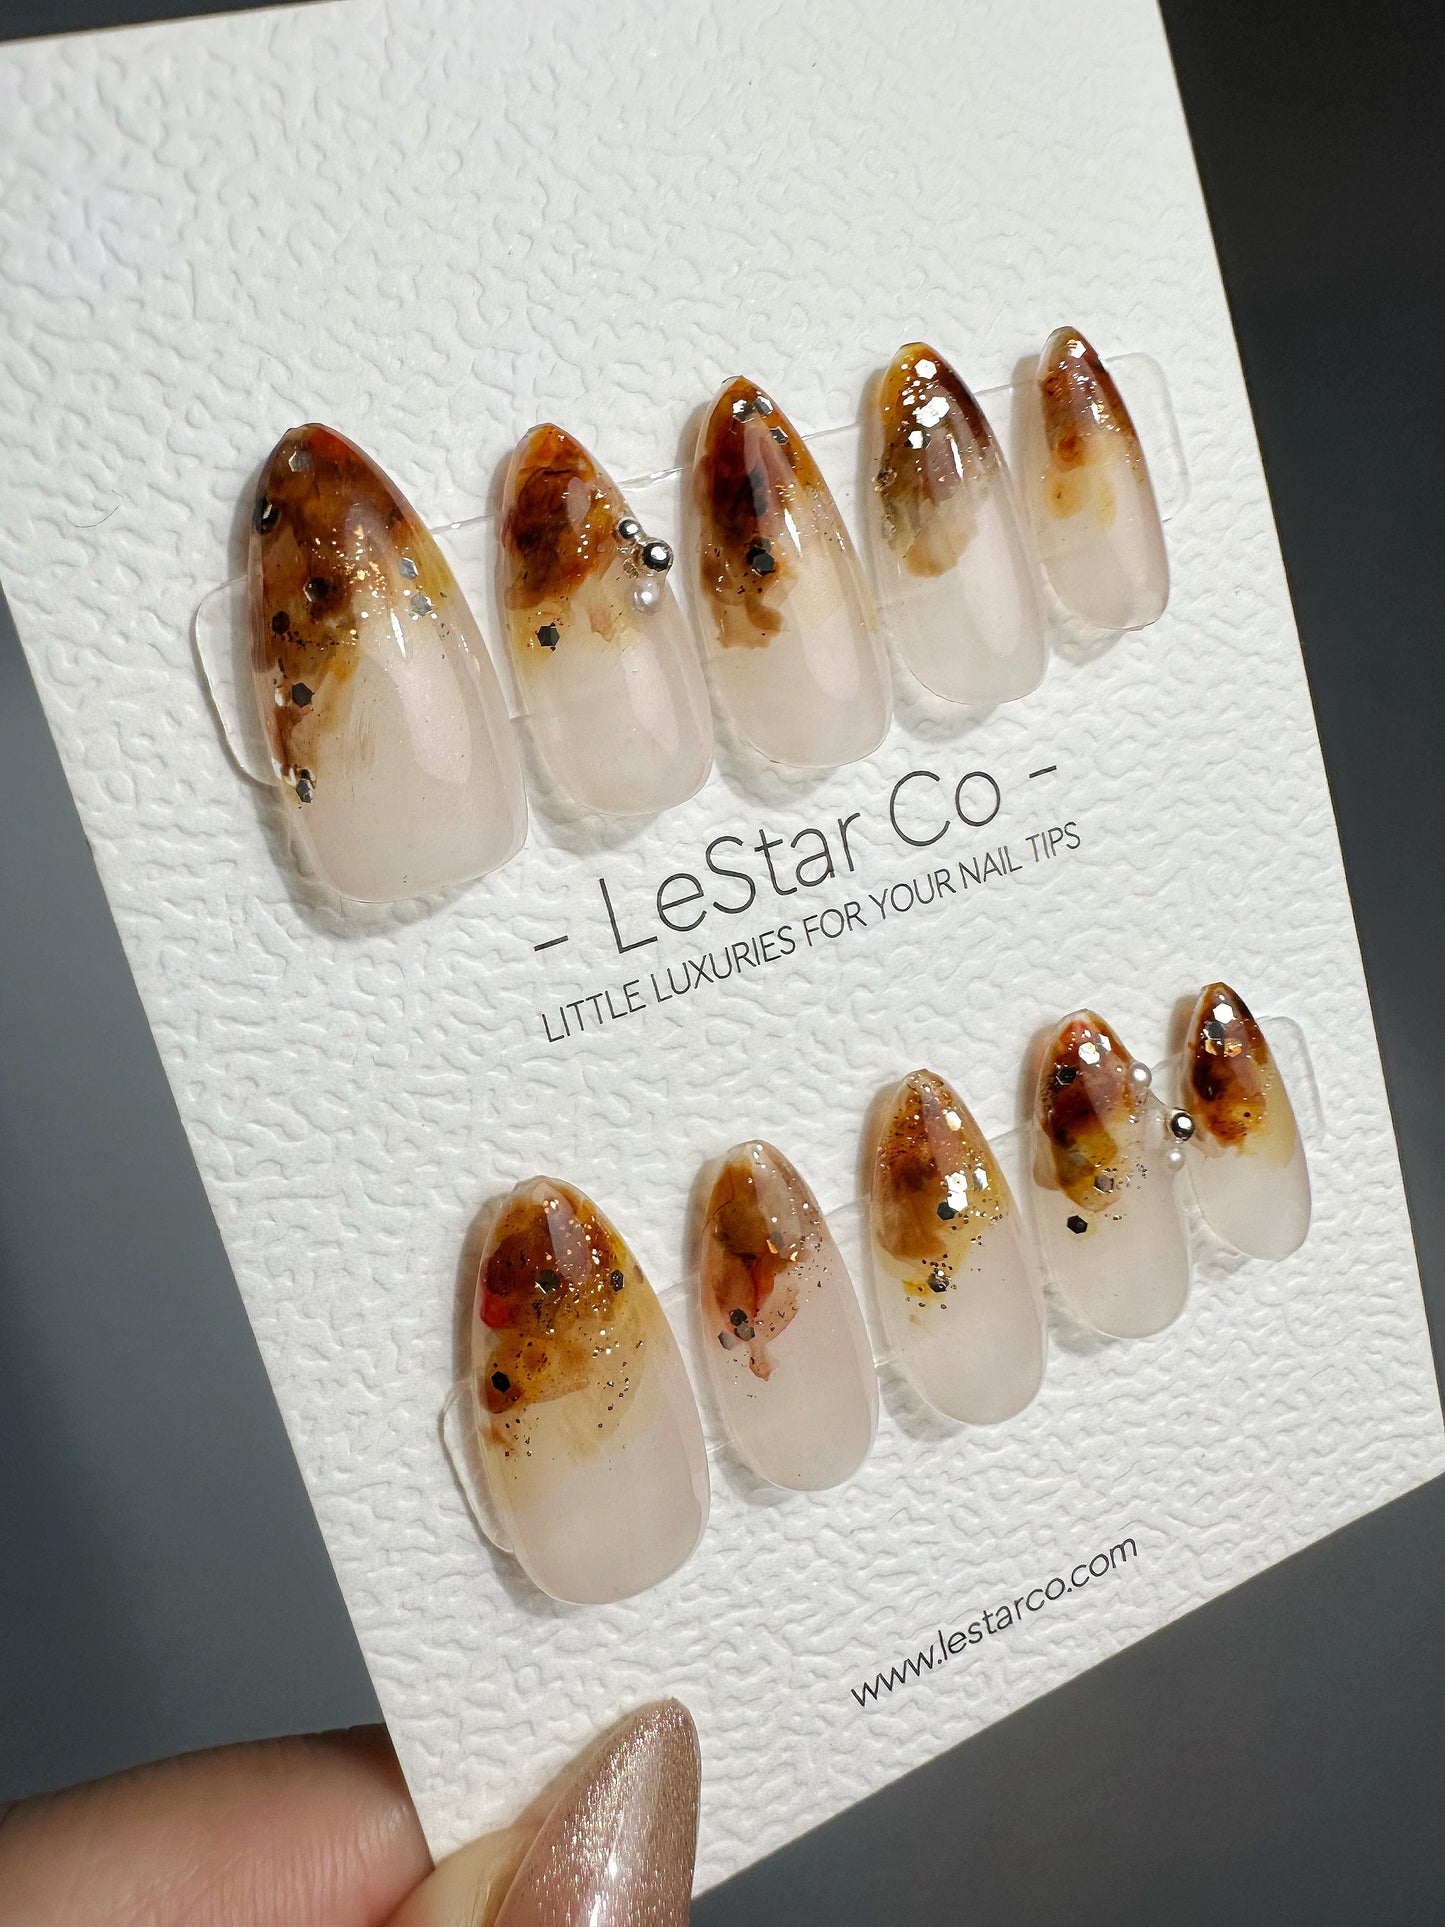 Reusable Gold Lava| Premium Press on Nails Gel | Fake Nails | Cute Fun Colorful Gel Nail Artist faux nails BB404